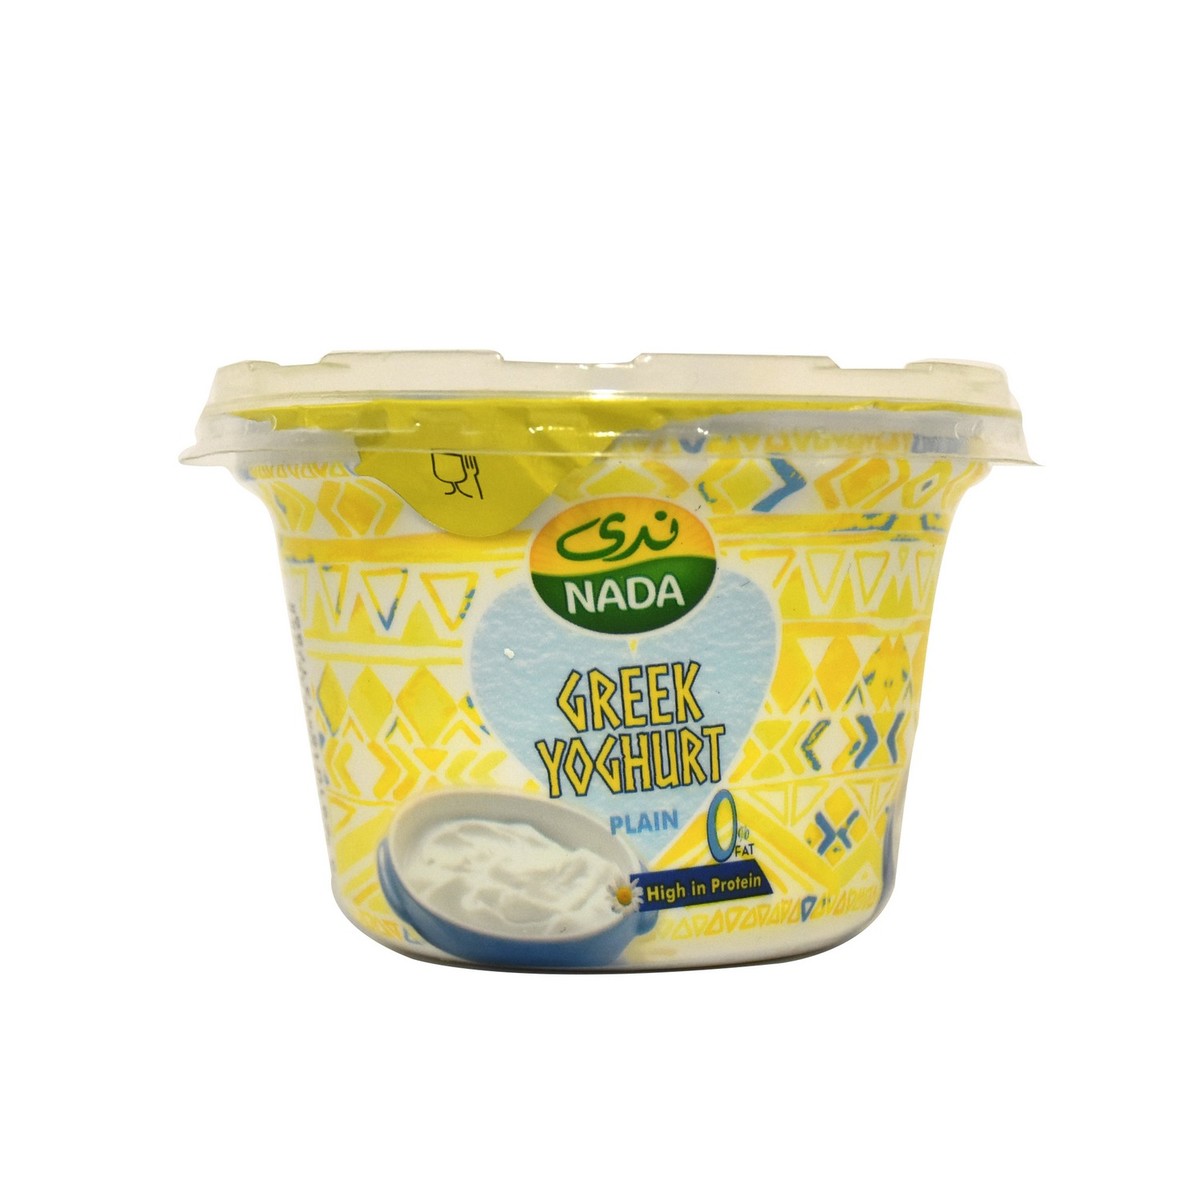 Nada Greek Yoghurt Plain 0% Fat 160g